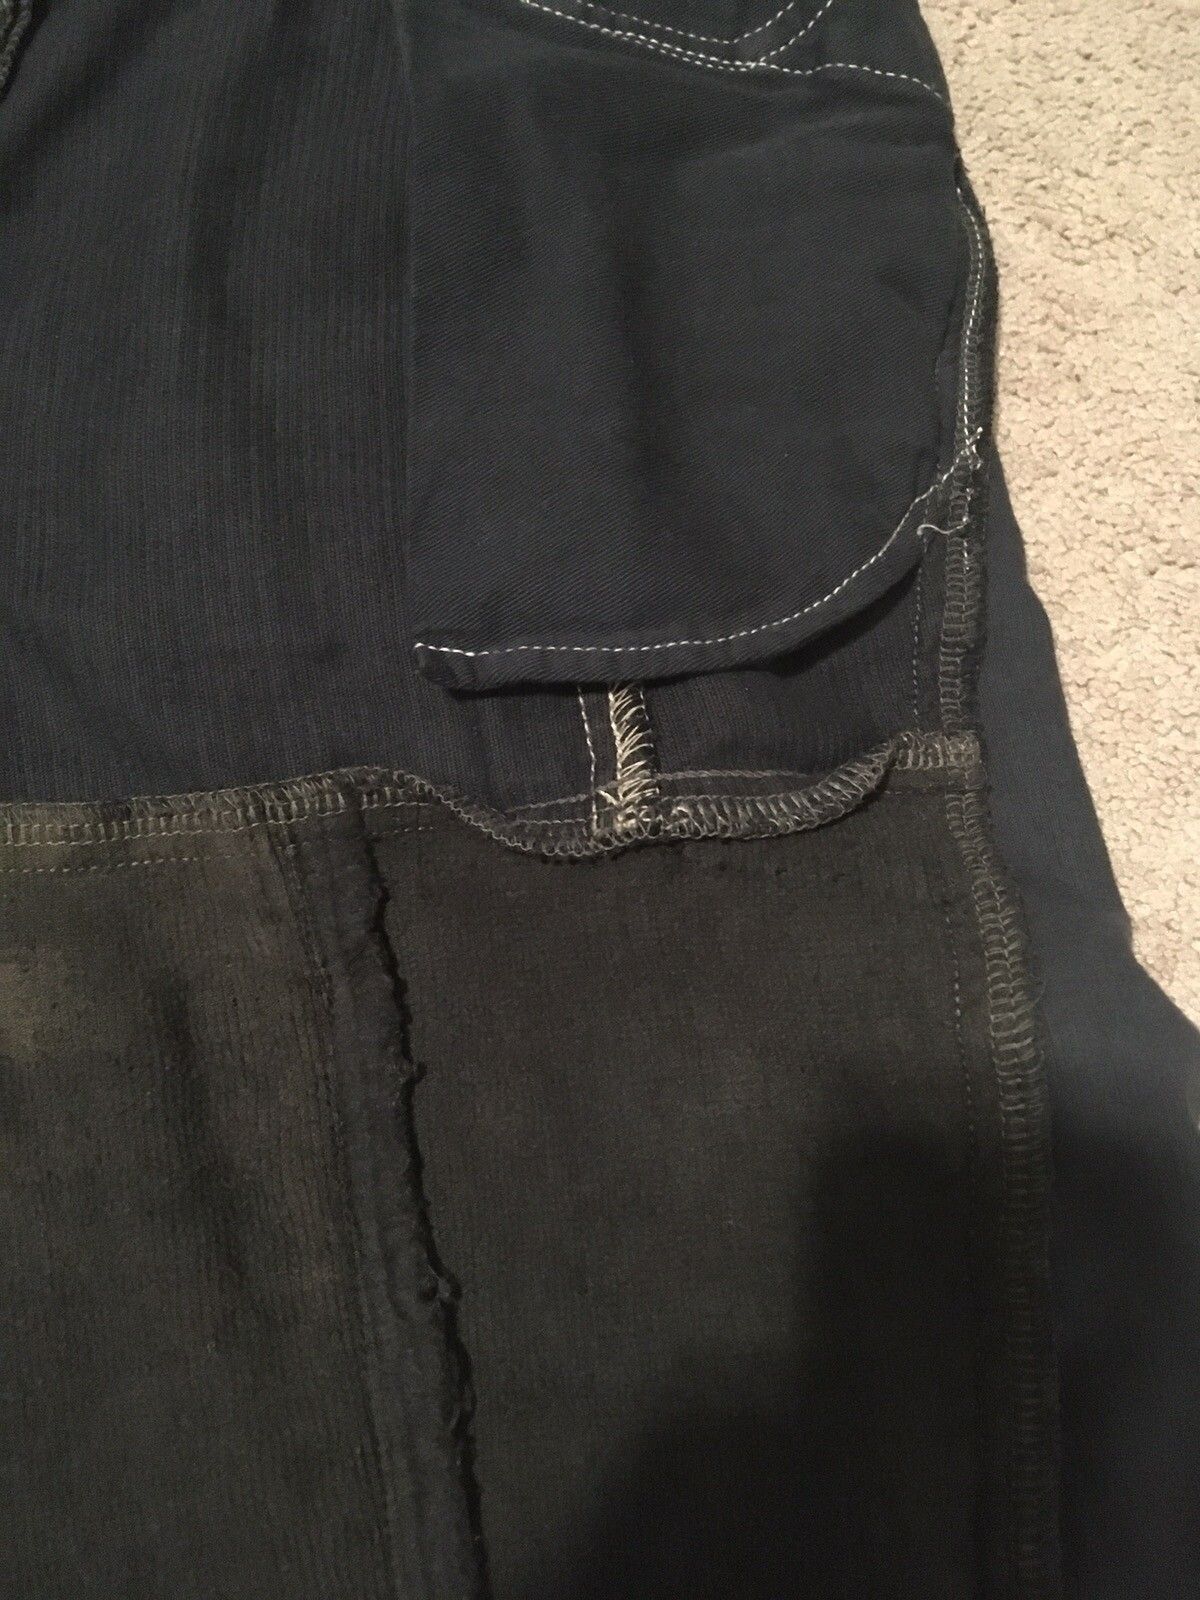 Needles Rebuild Patchwork Corduroy Trousers Size US 29 - 19 Thumbnail